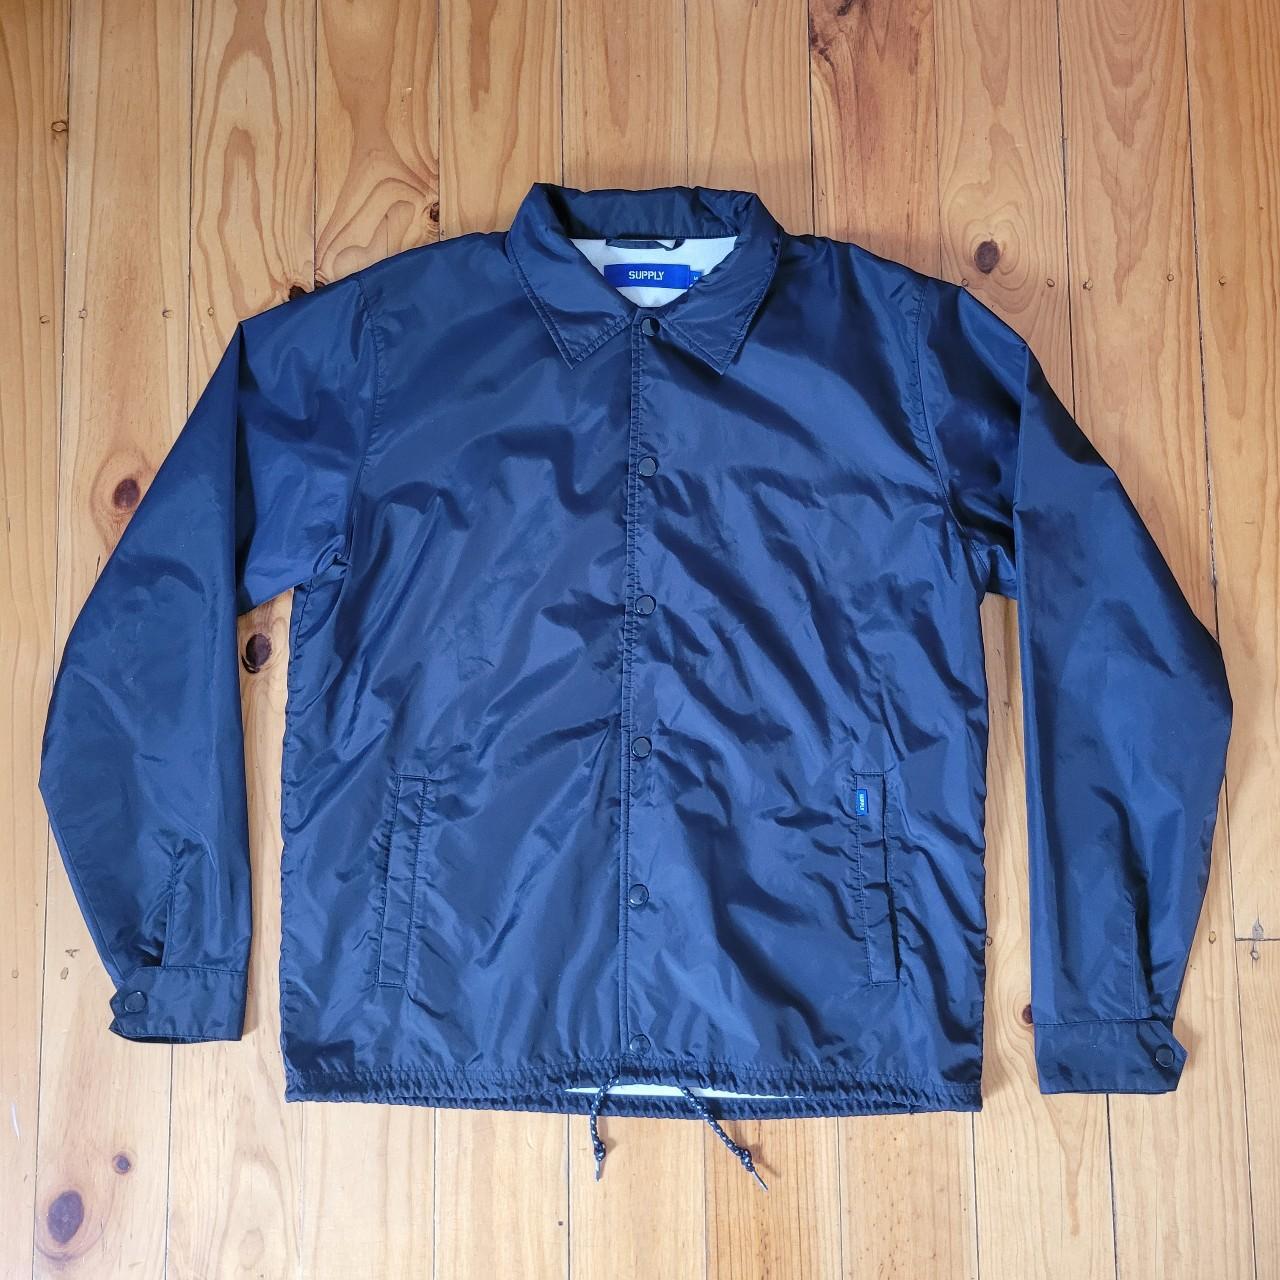 Supply Store coach jacket in navy blue Medium. Fits... - Depop